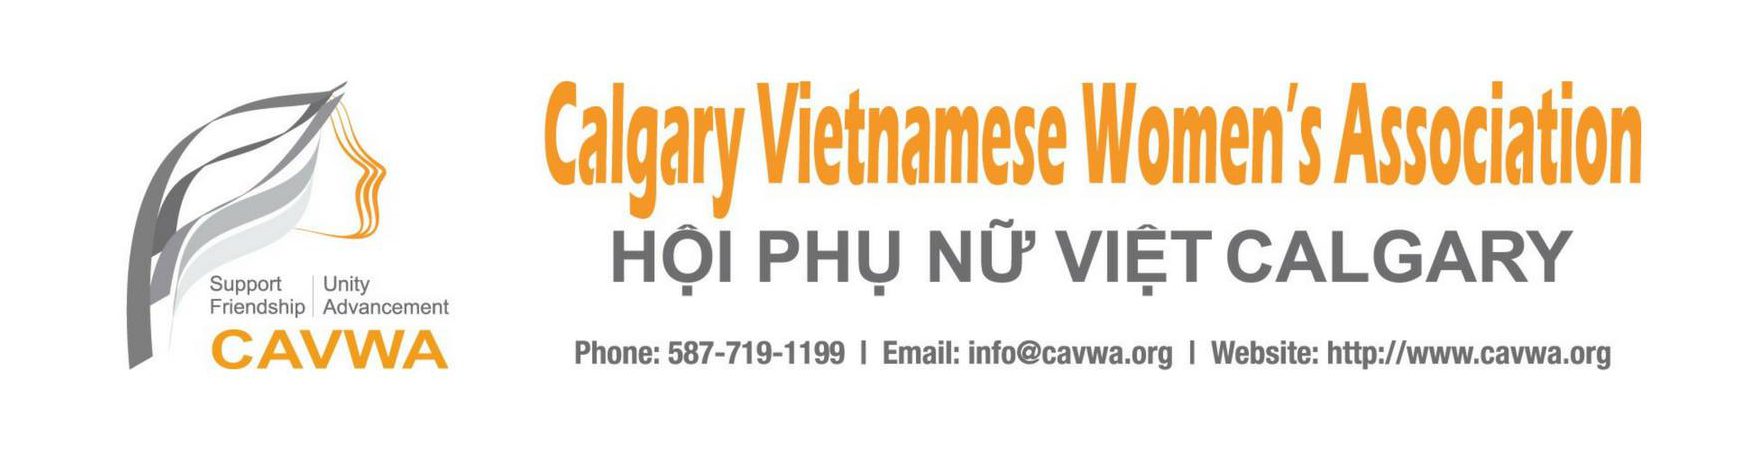 Calgary Vietnamese Women's Association